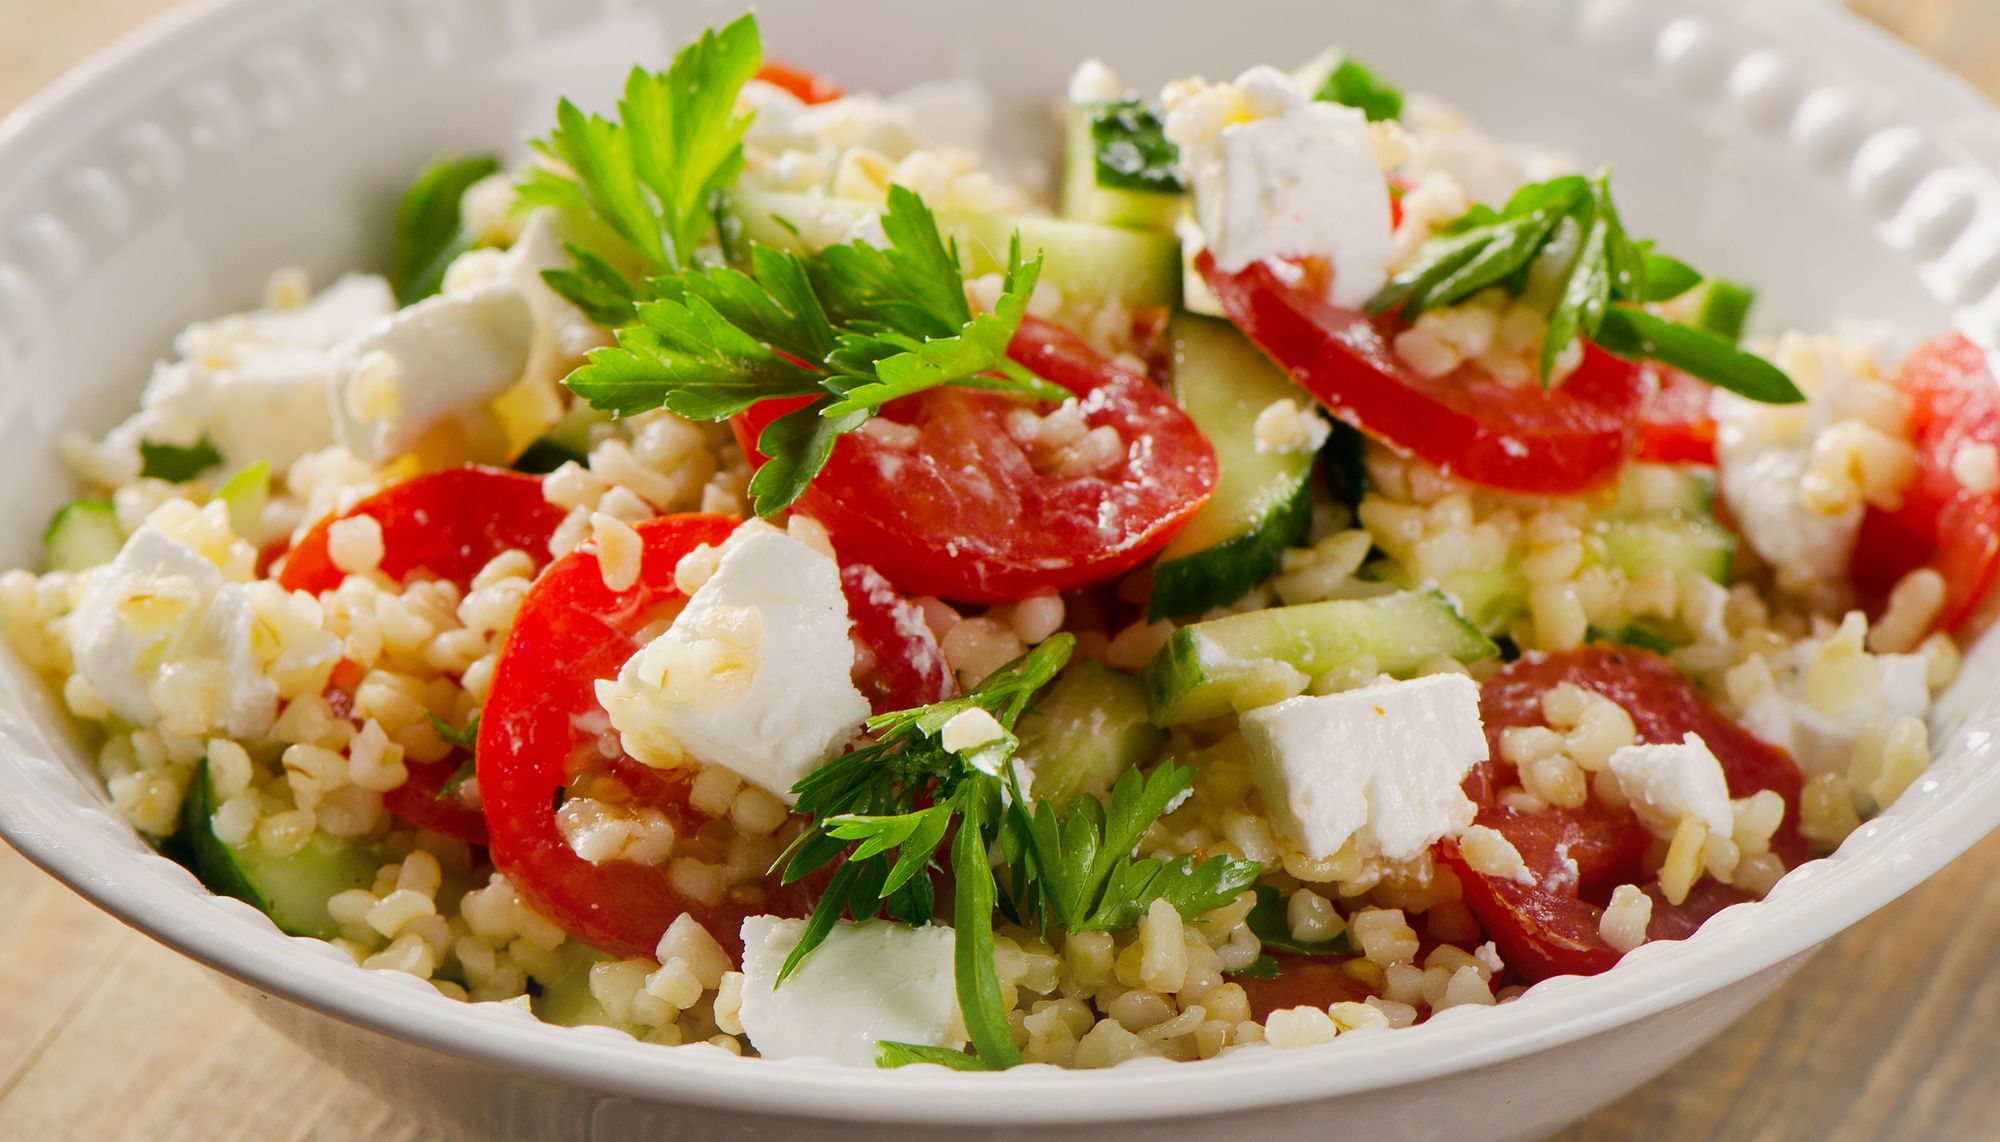 Bulgur Wheat and Goats’ Cheese Salad